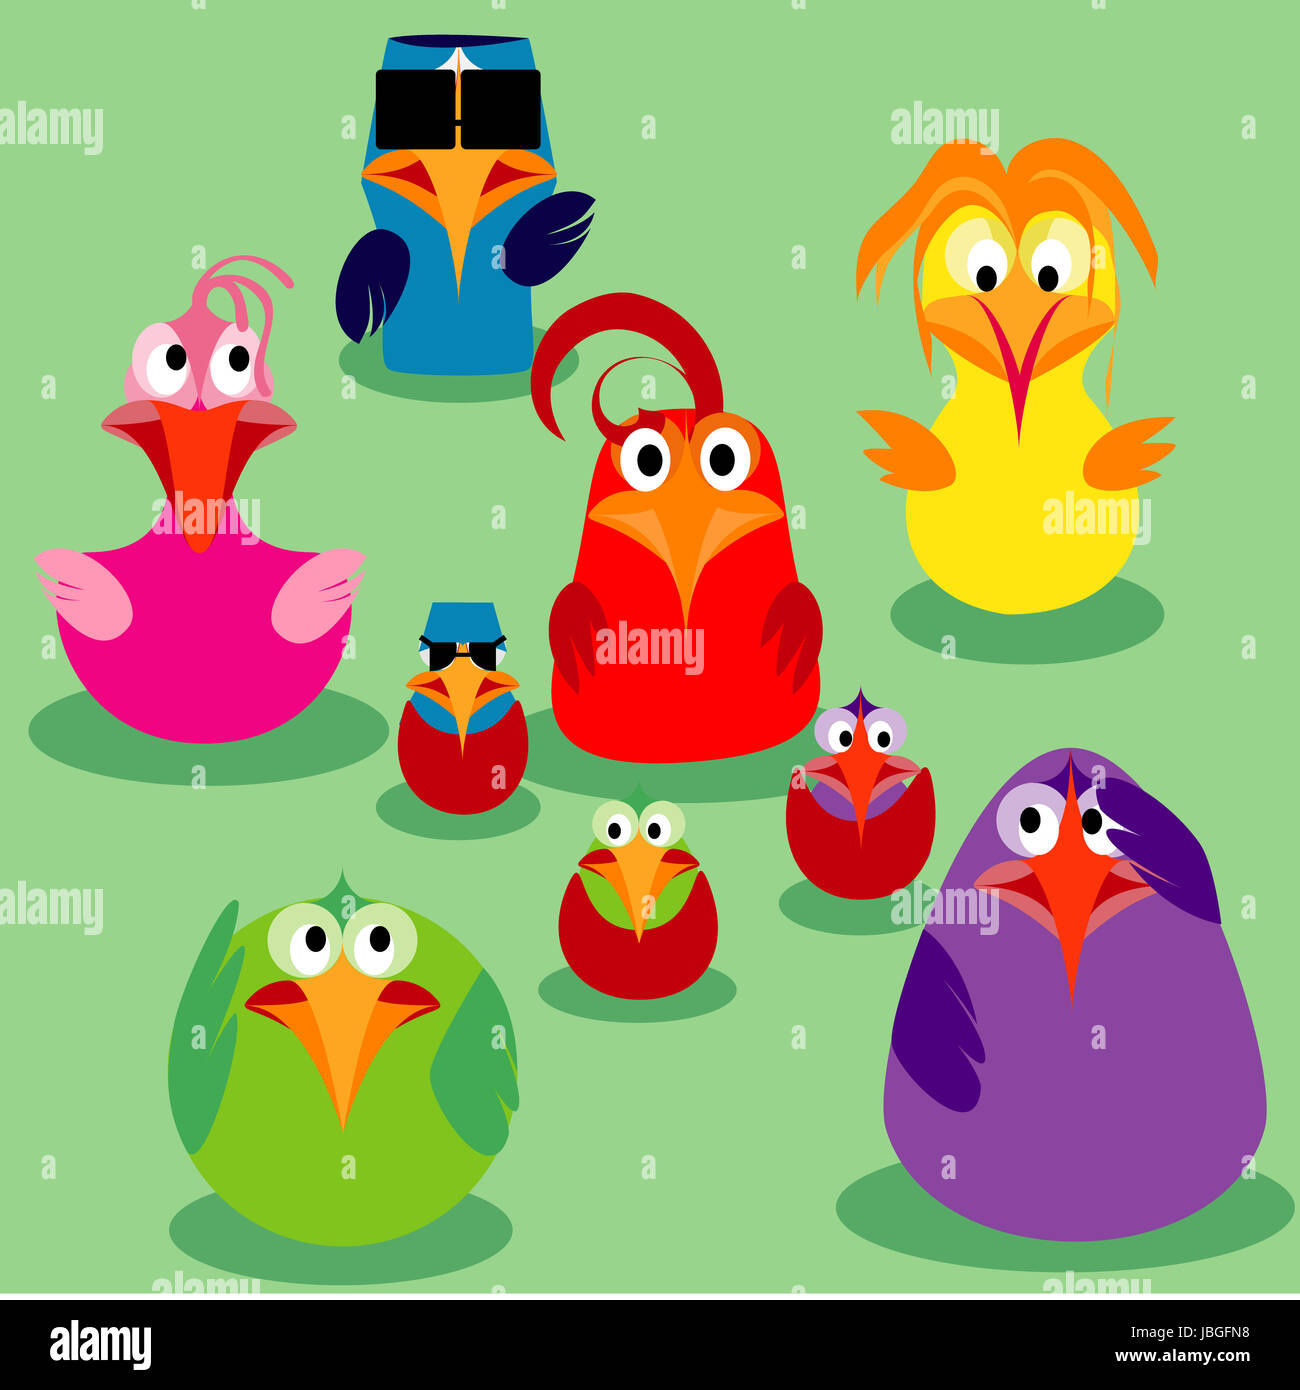 Cute cartoon birds, family issues. Vector illustration. Stock Photo